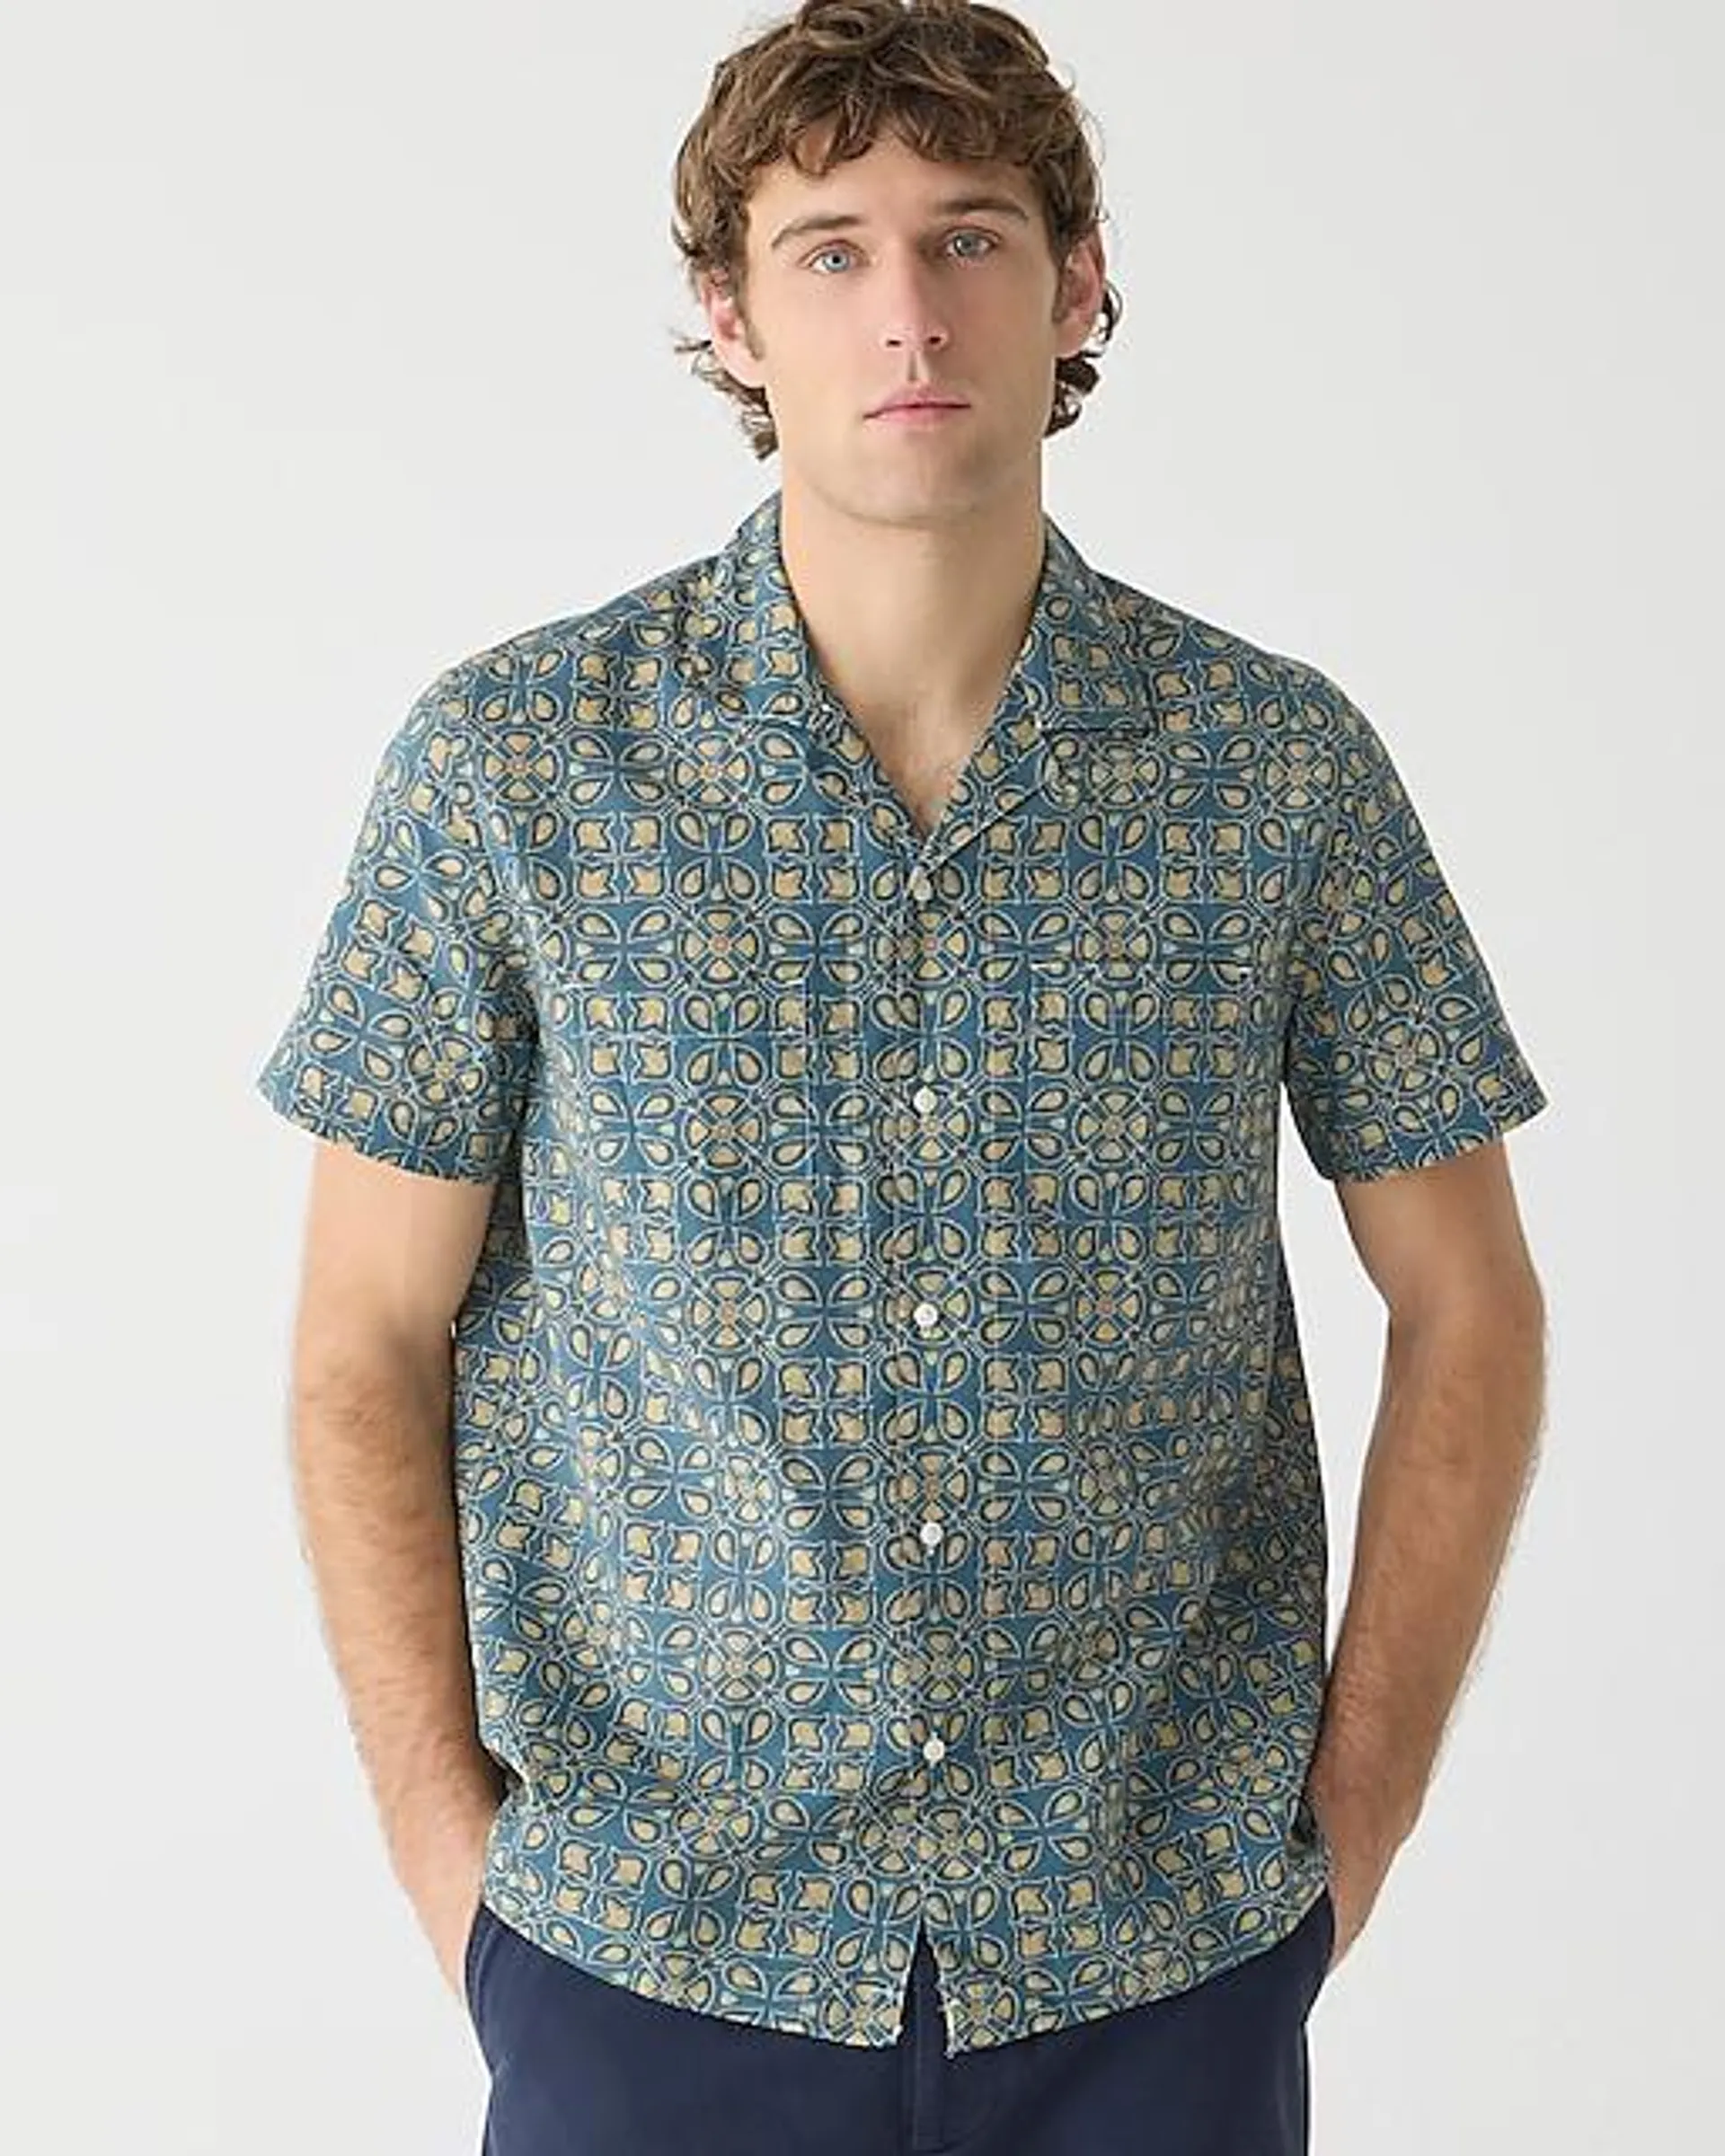 Short-sleeve slub cotton-linen blend camp-collar shirt in print